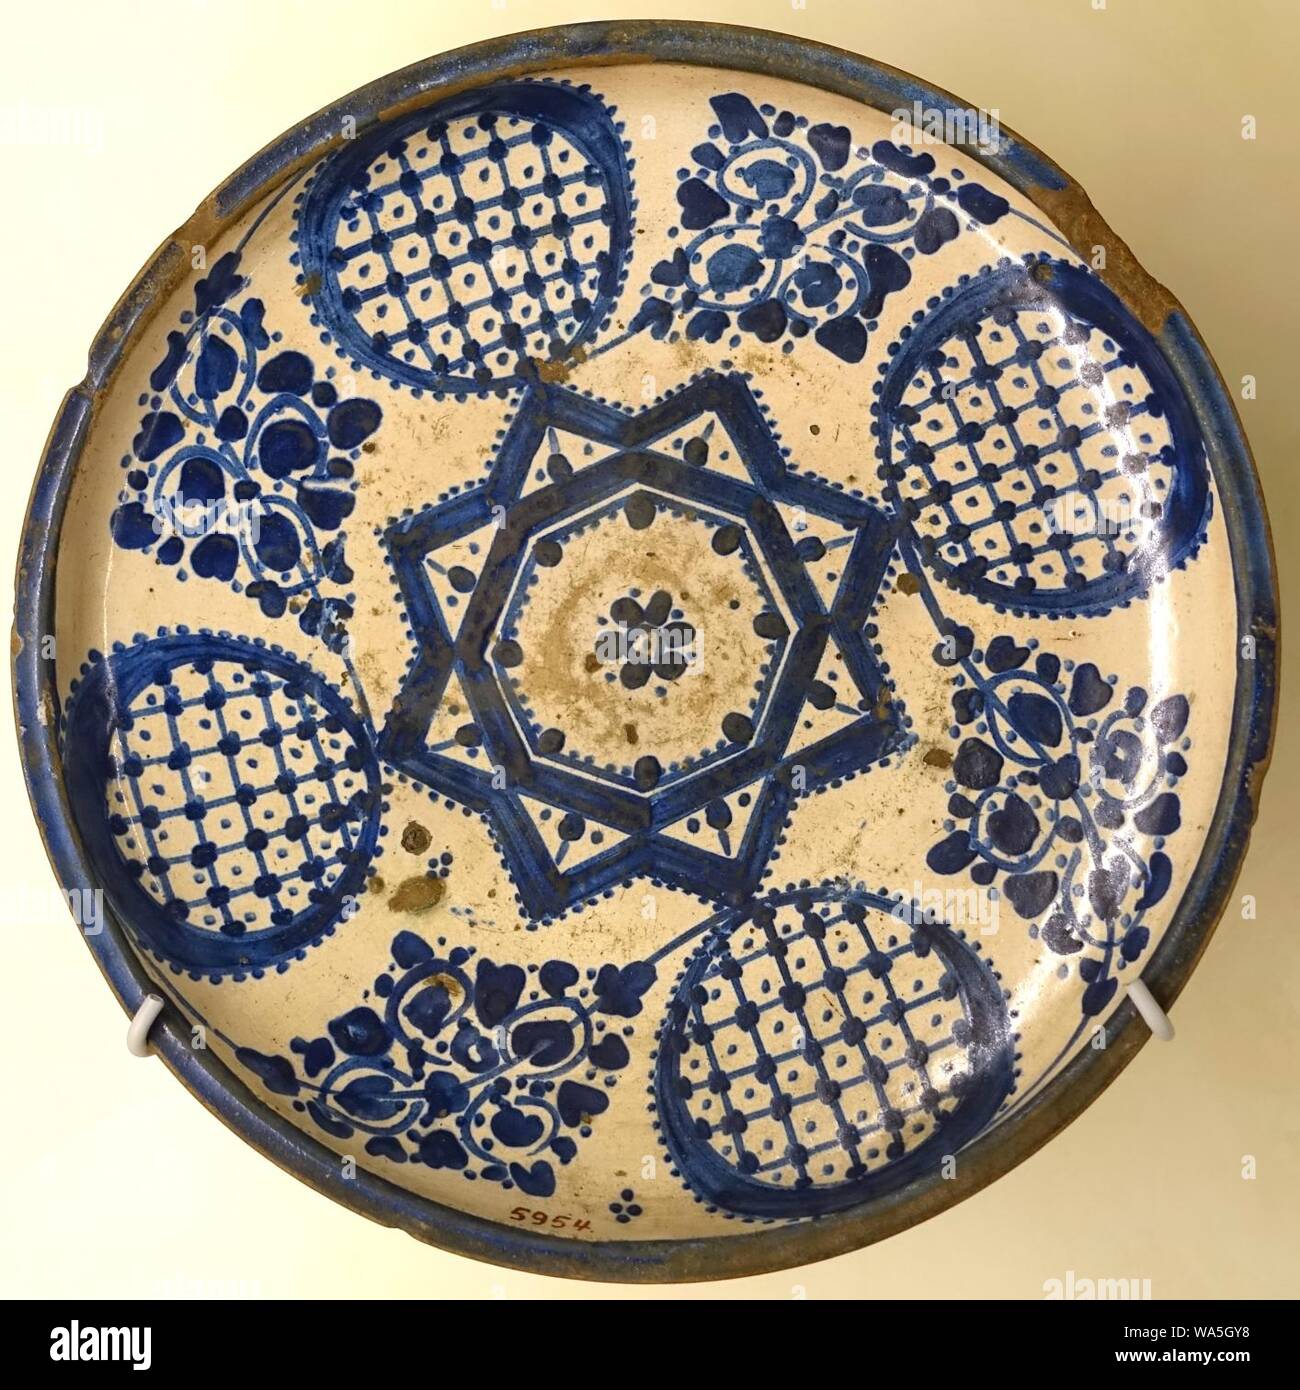 Dish, Fez, Morocco, 19th century AD, glazed ceramic Stock Photo